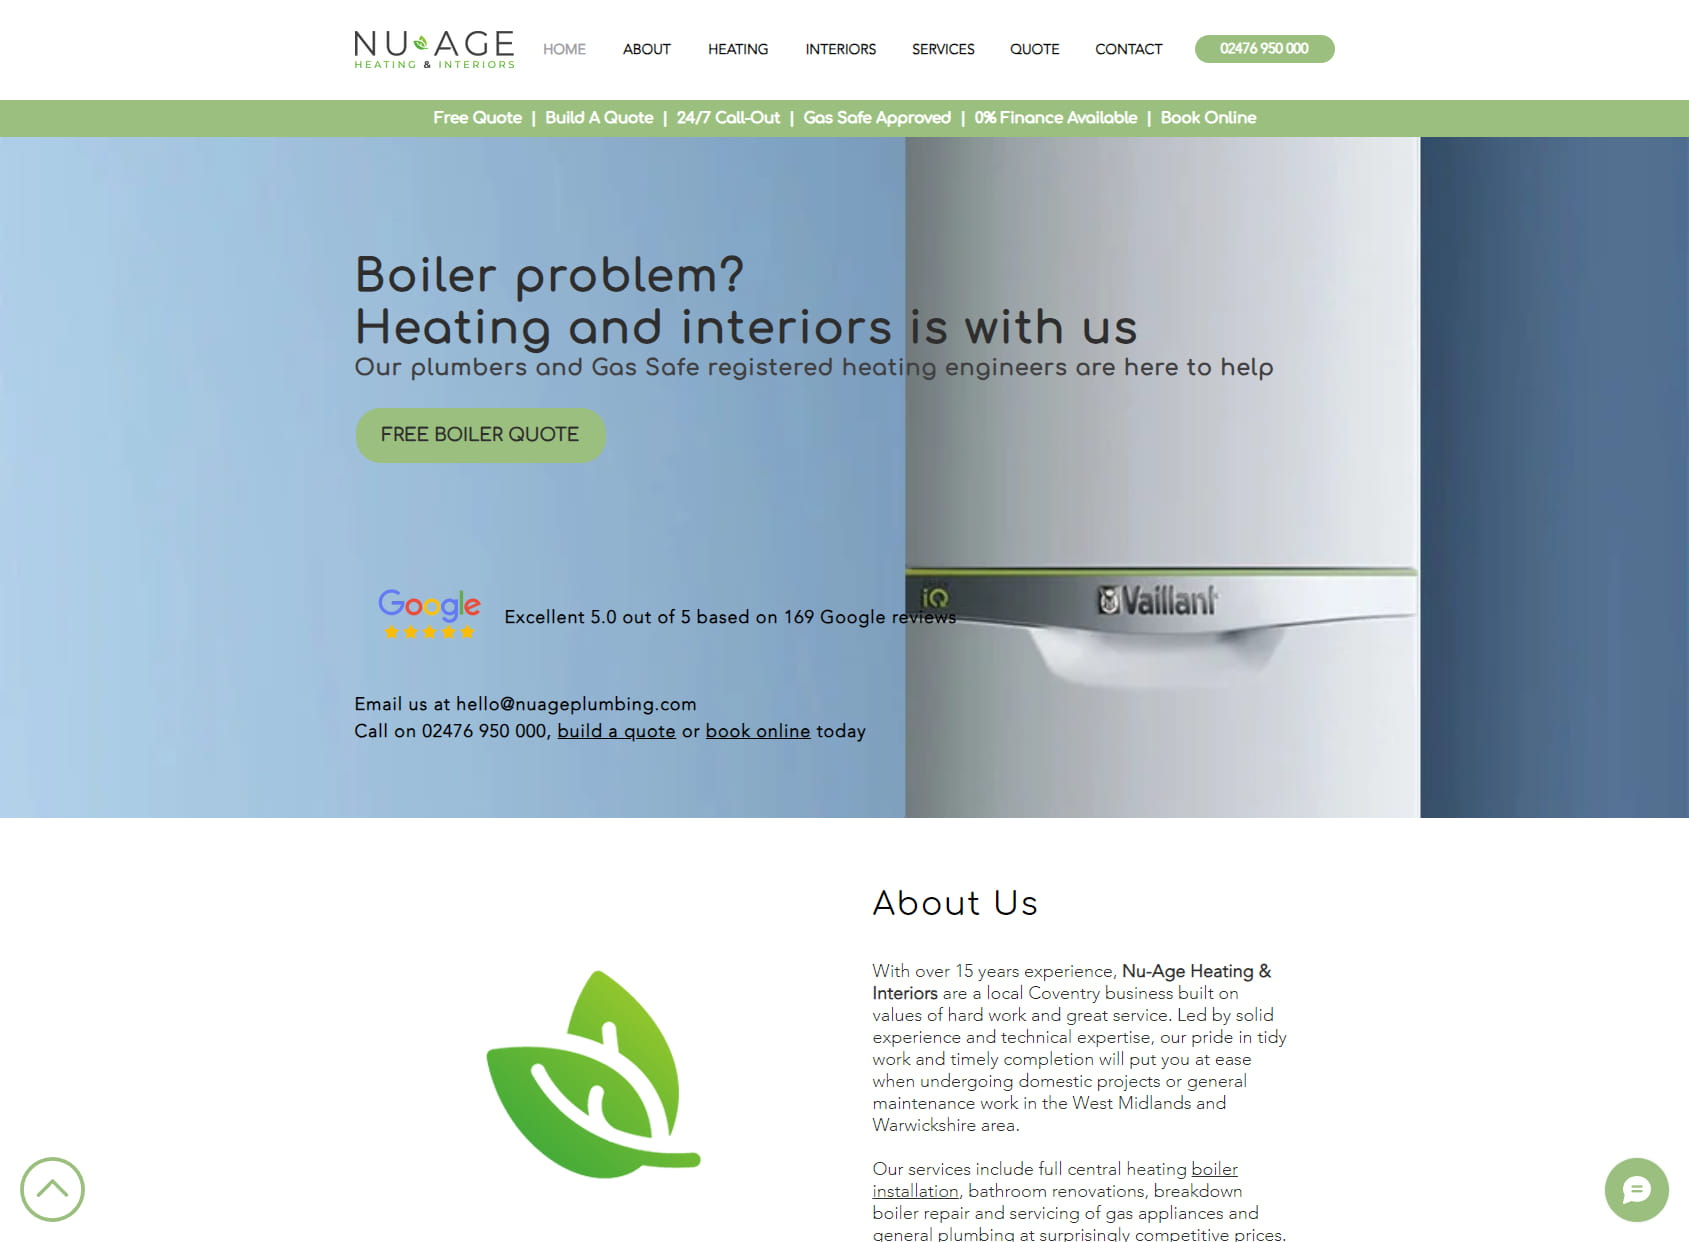 Nu Age Heating & Interiors Ltd